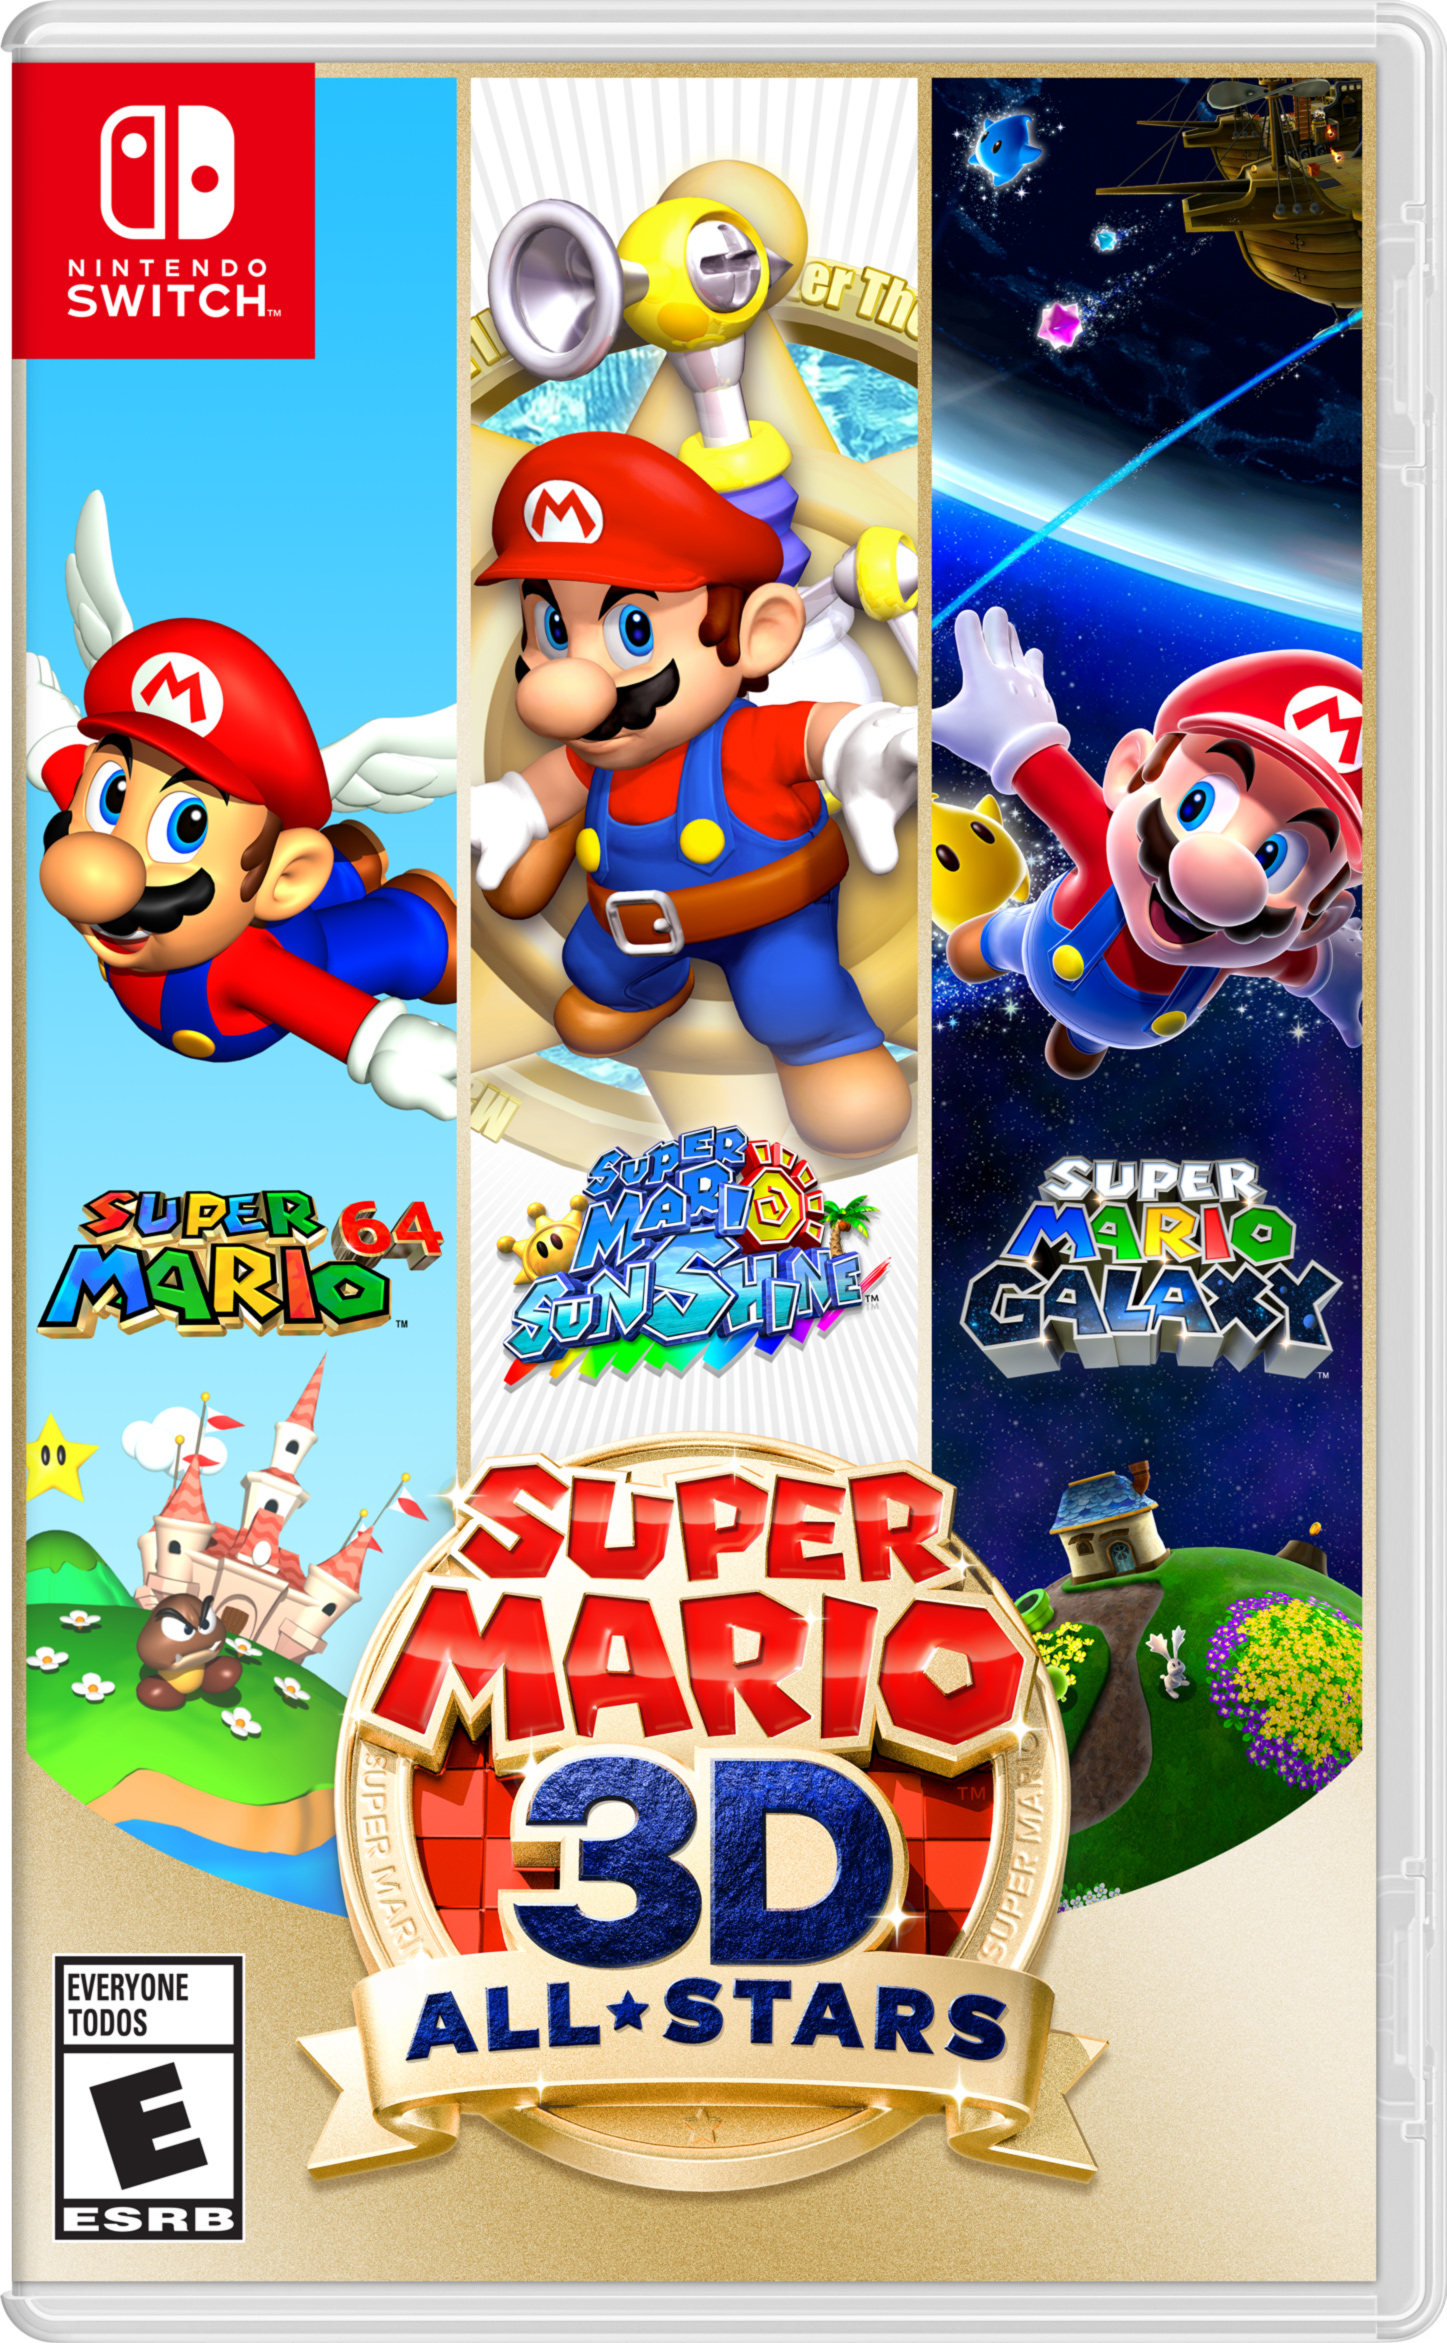 Super Mario 3D All-Stars, Nintendo, Nintendo Switch 045496596743 - image 1 of 15